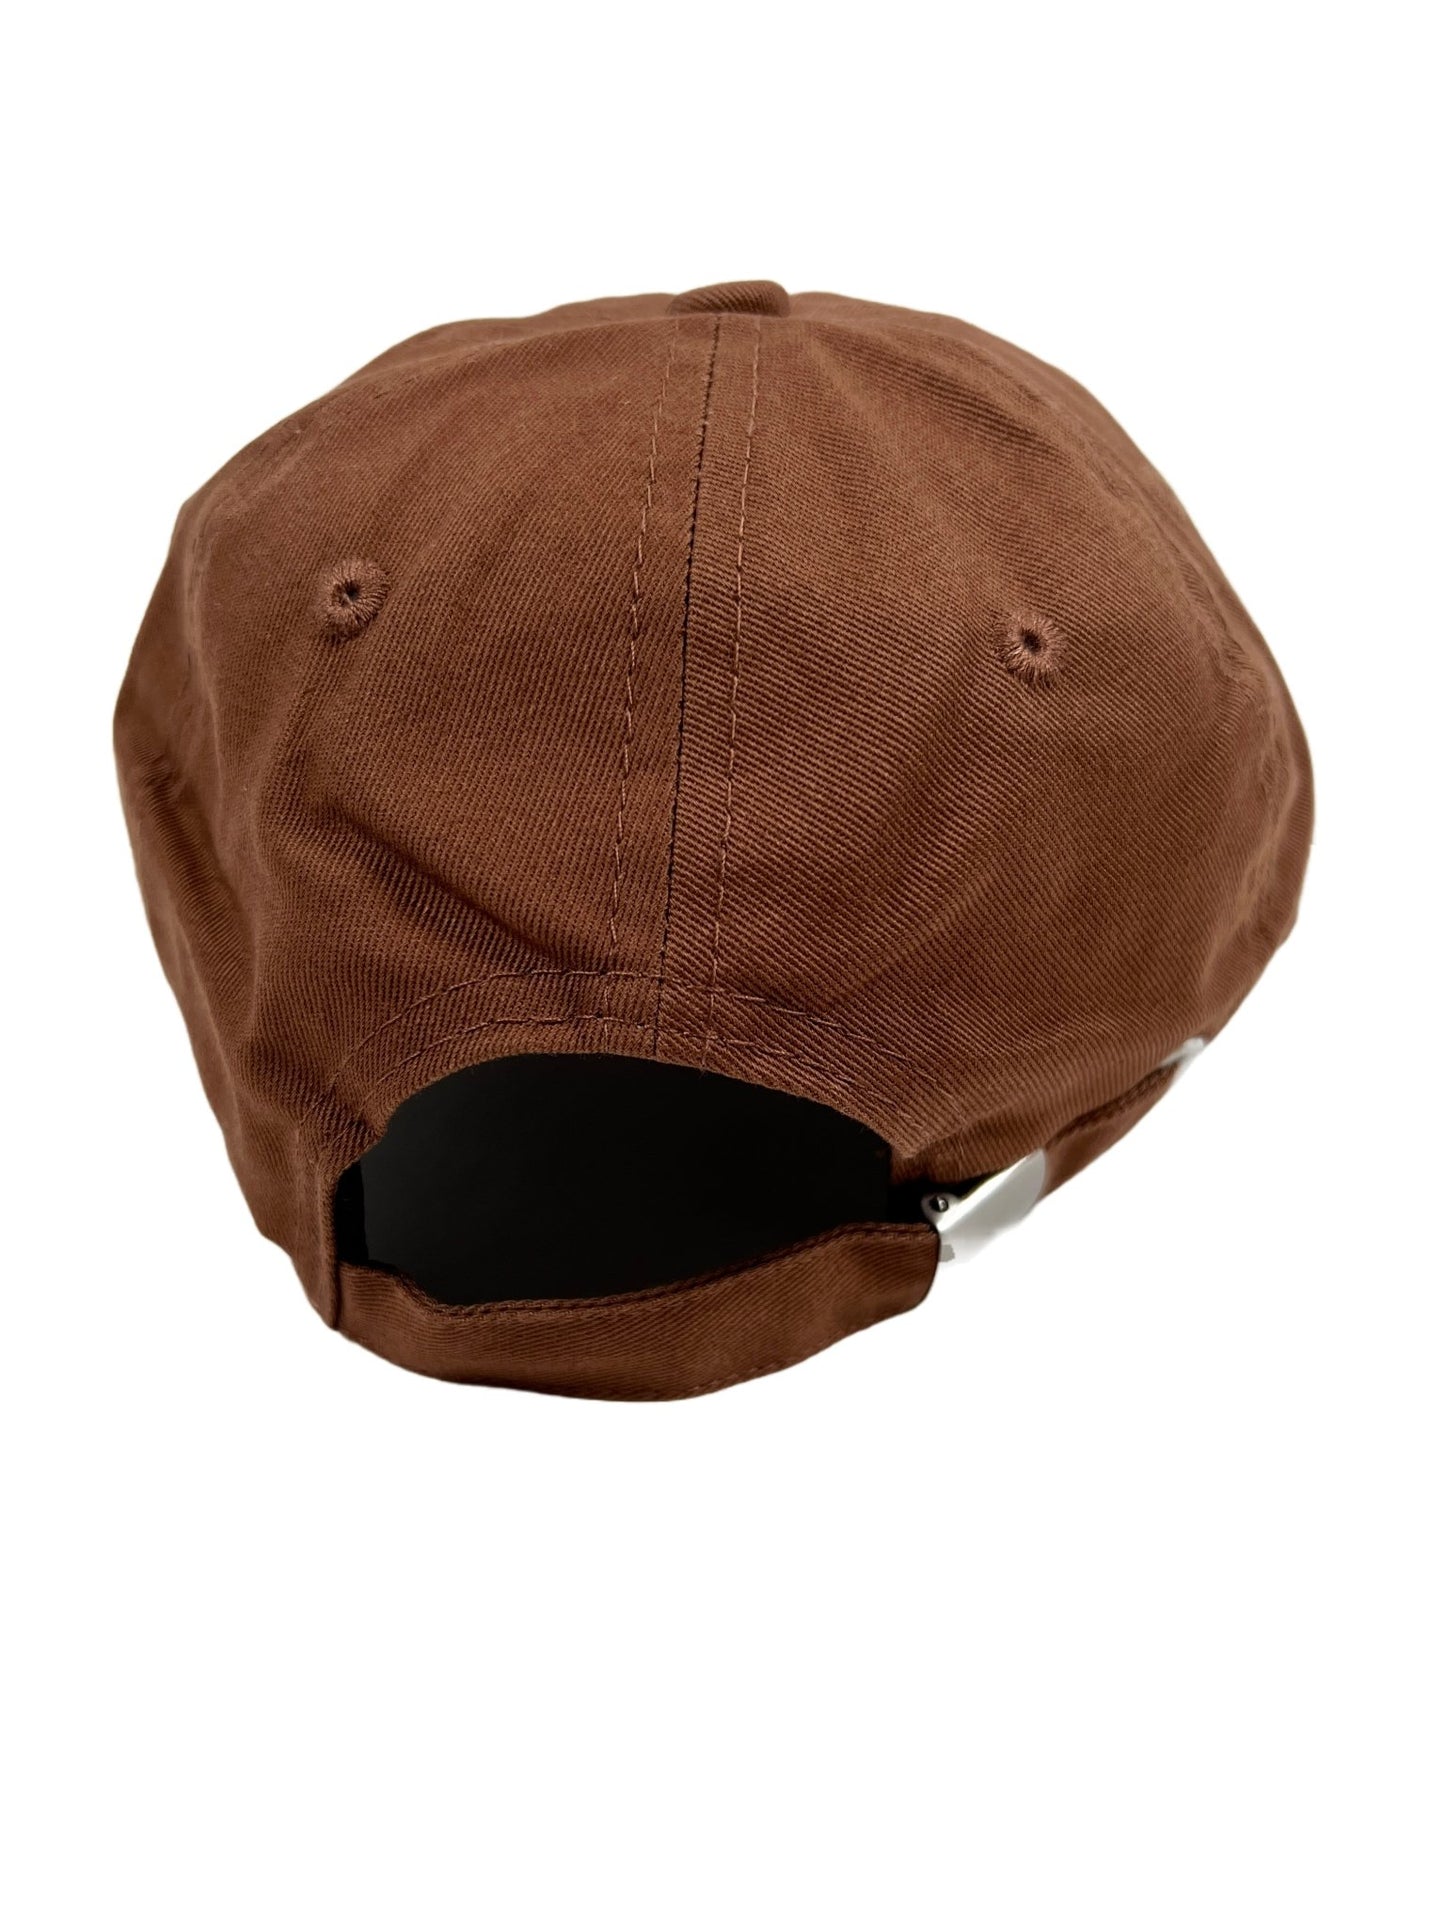 A brown DROLE DE MONSIEUR cotton baseball cap on a white background.